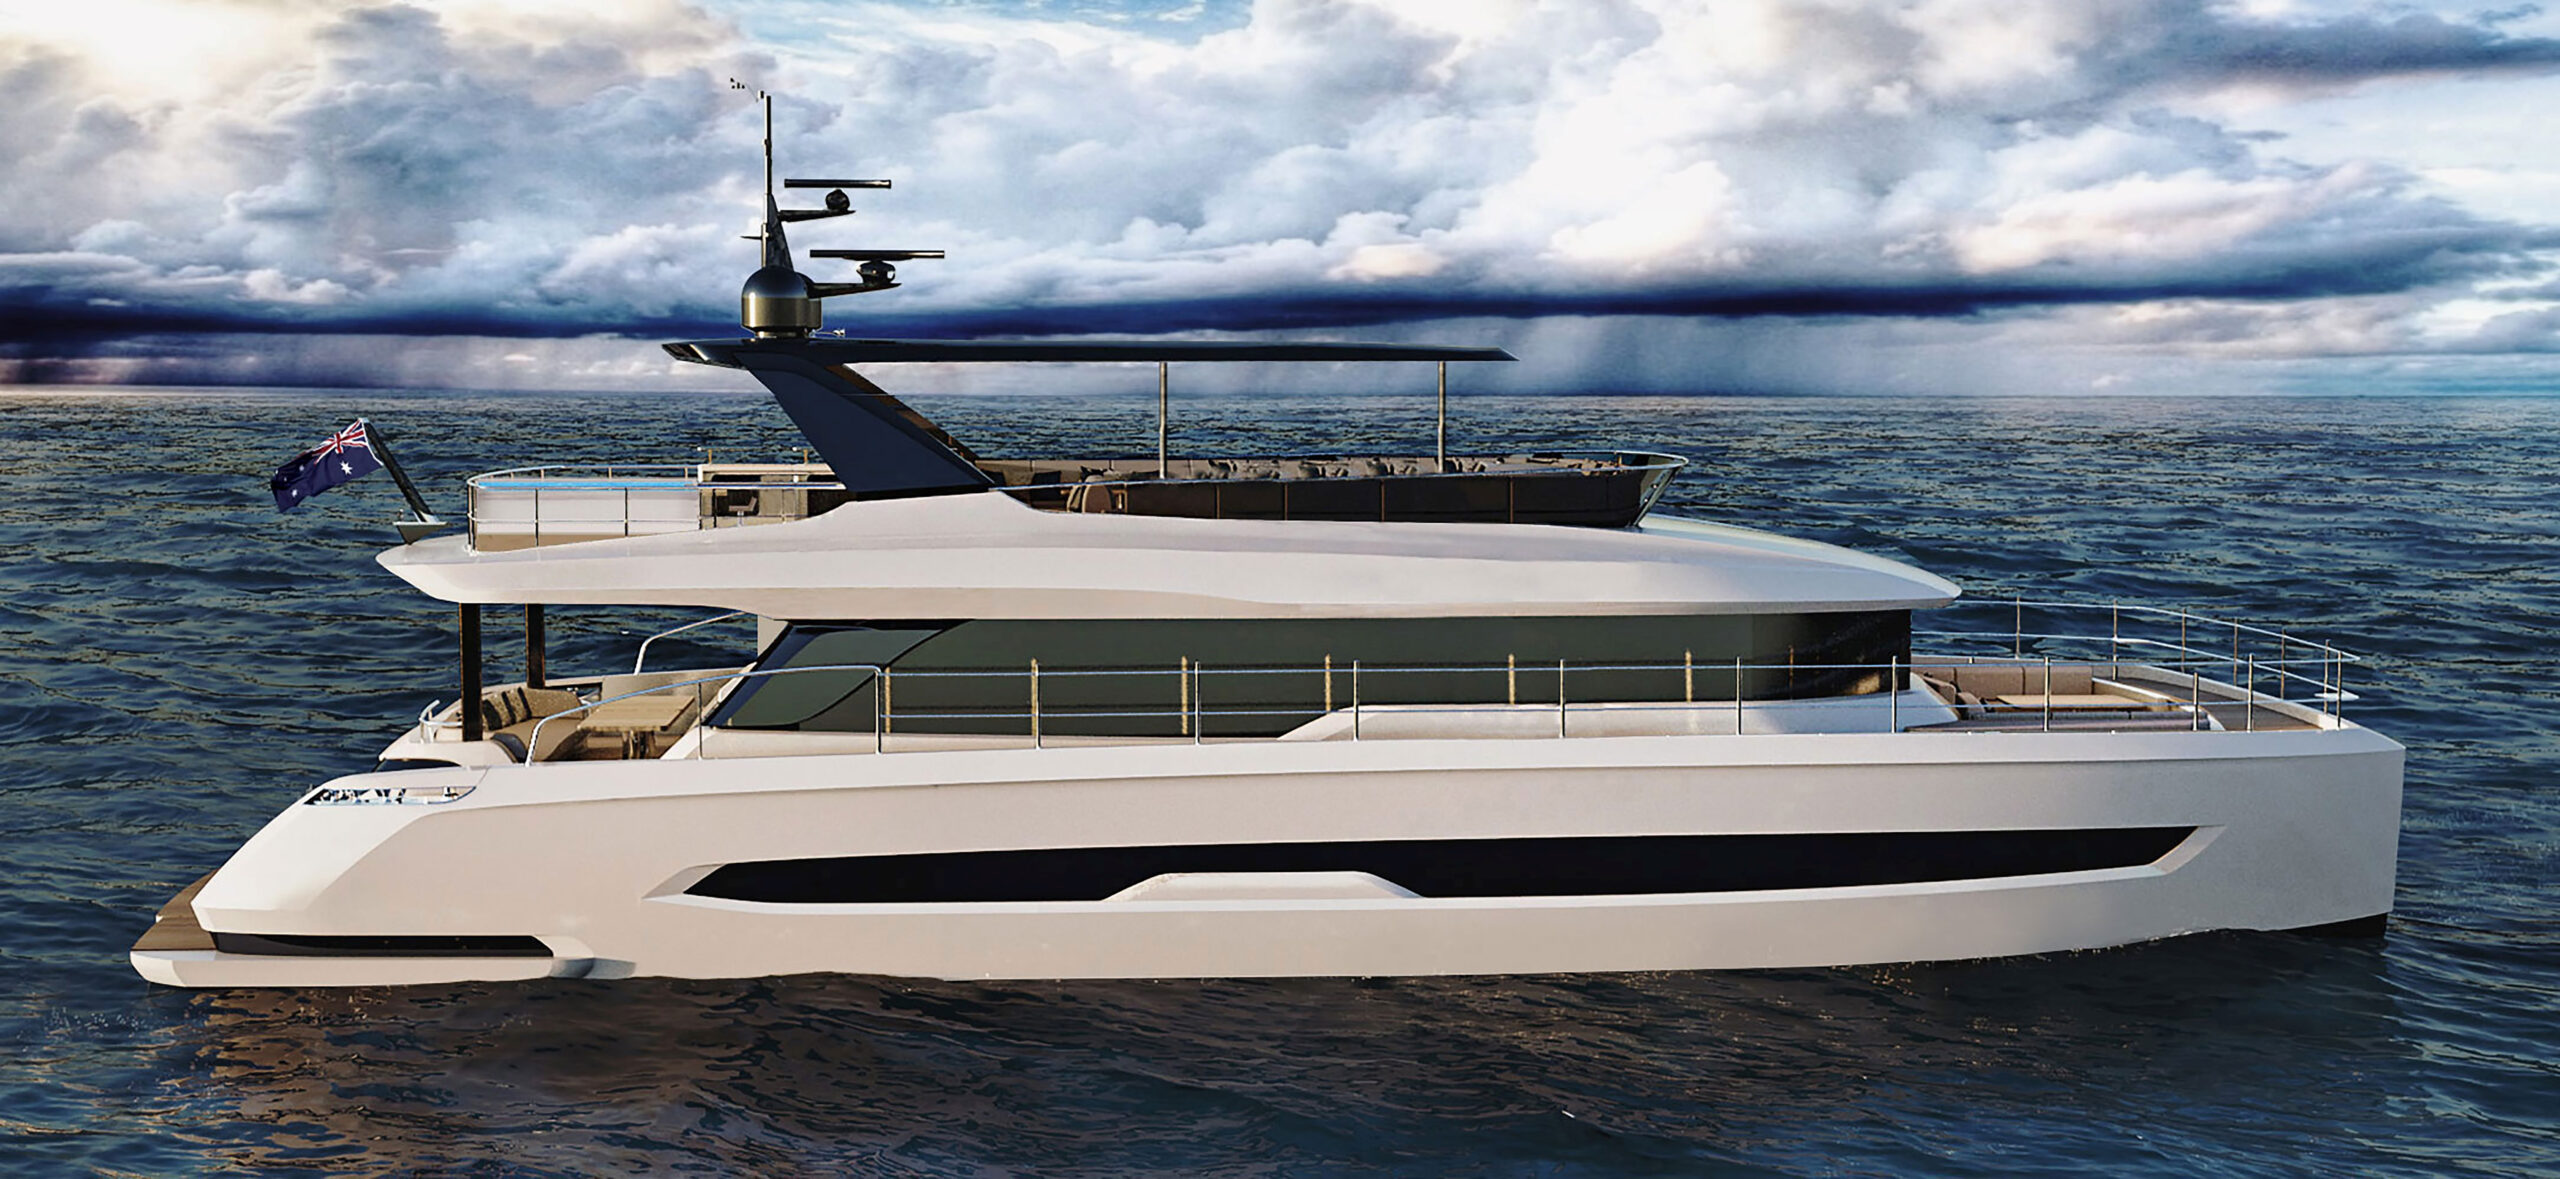 Heysea Yachts power catamaran side profile